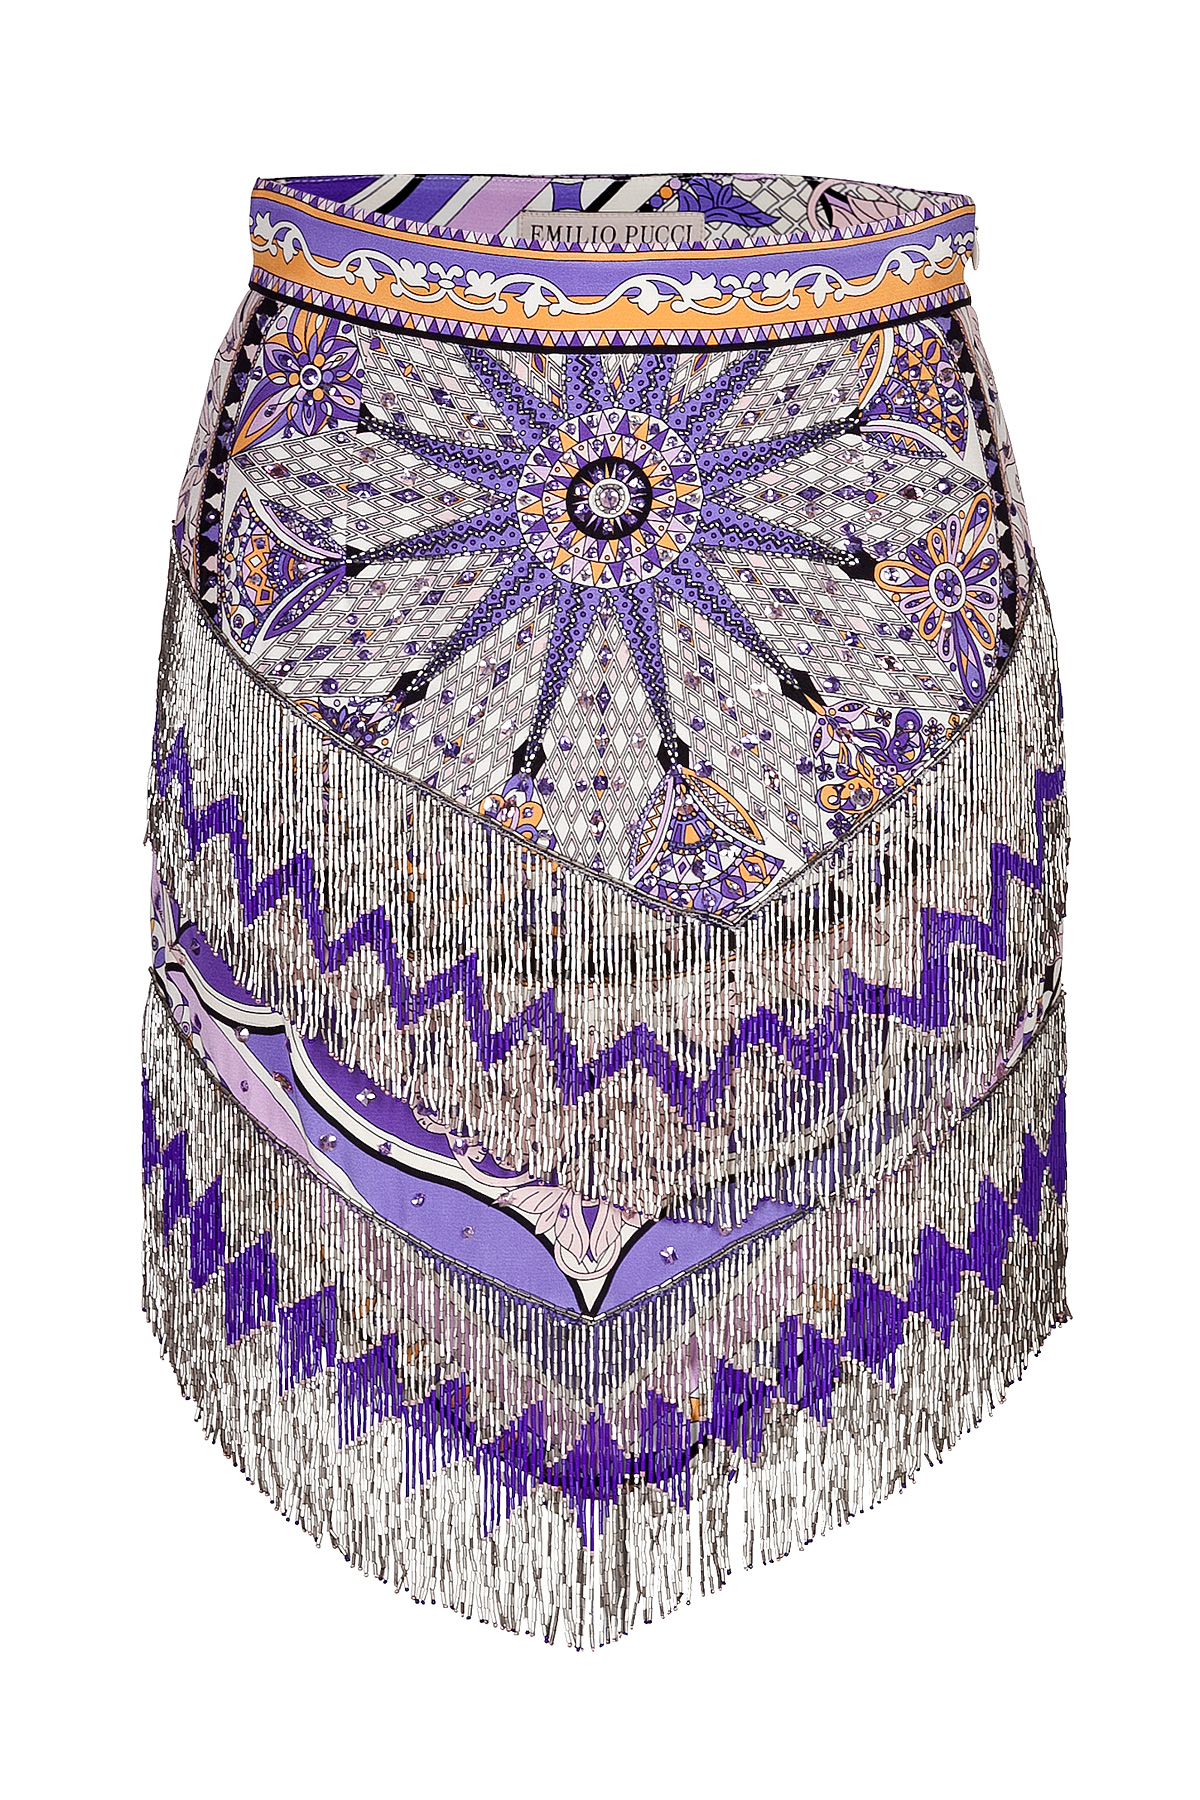 Lyst - Emilio pucci Silk Beaded Fringe Skirt in Purple